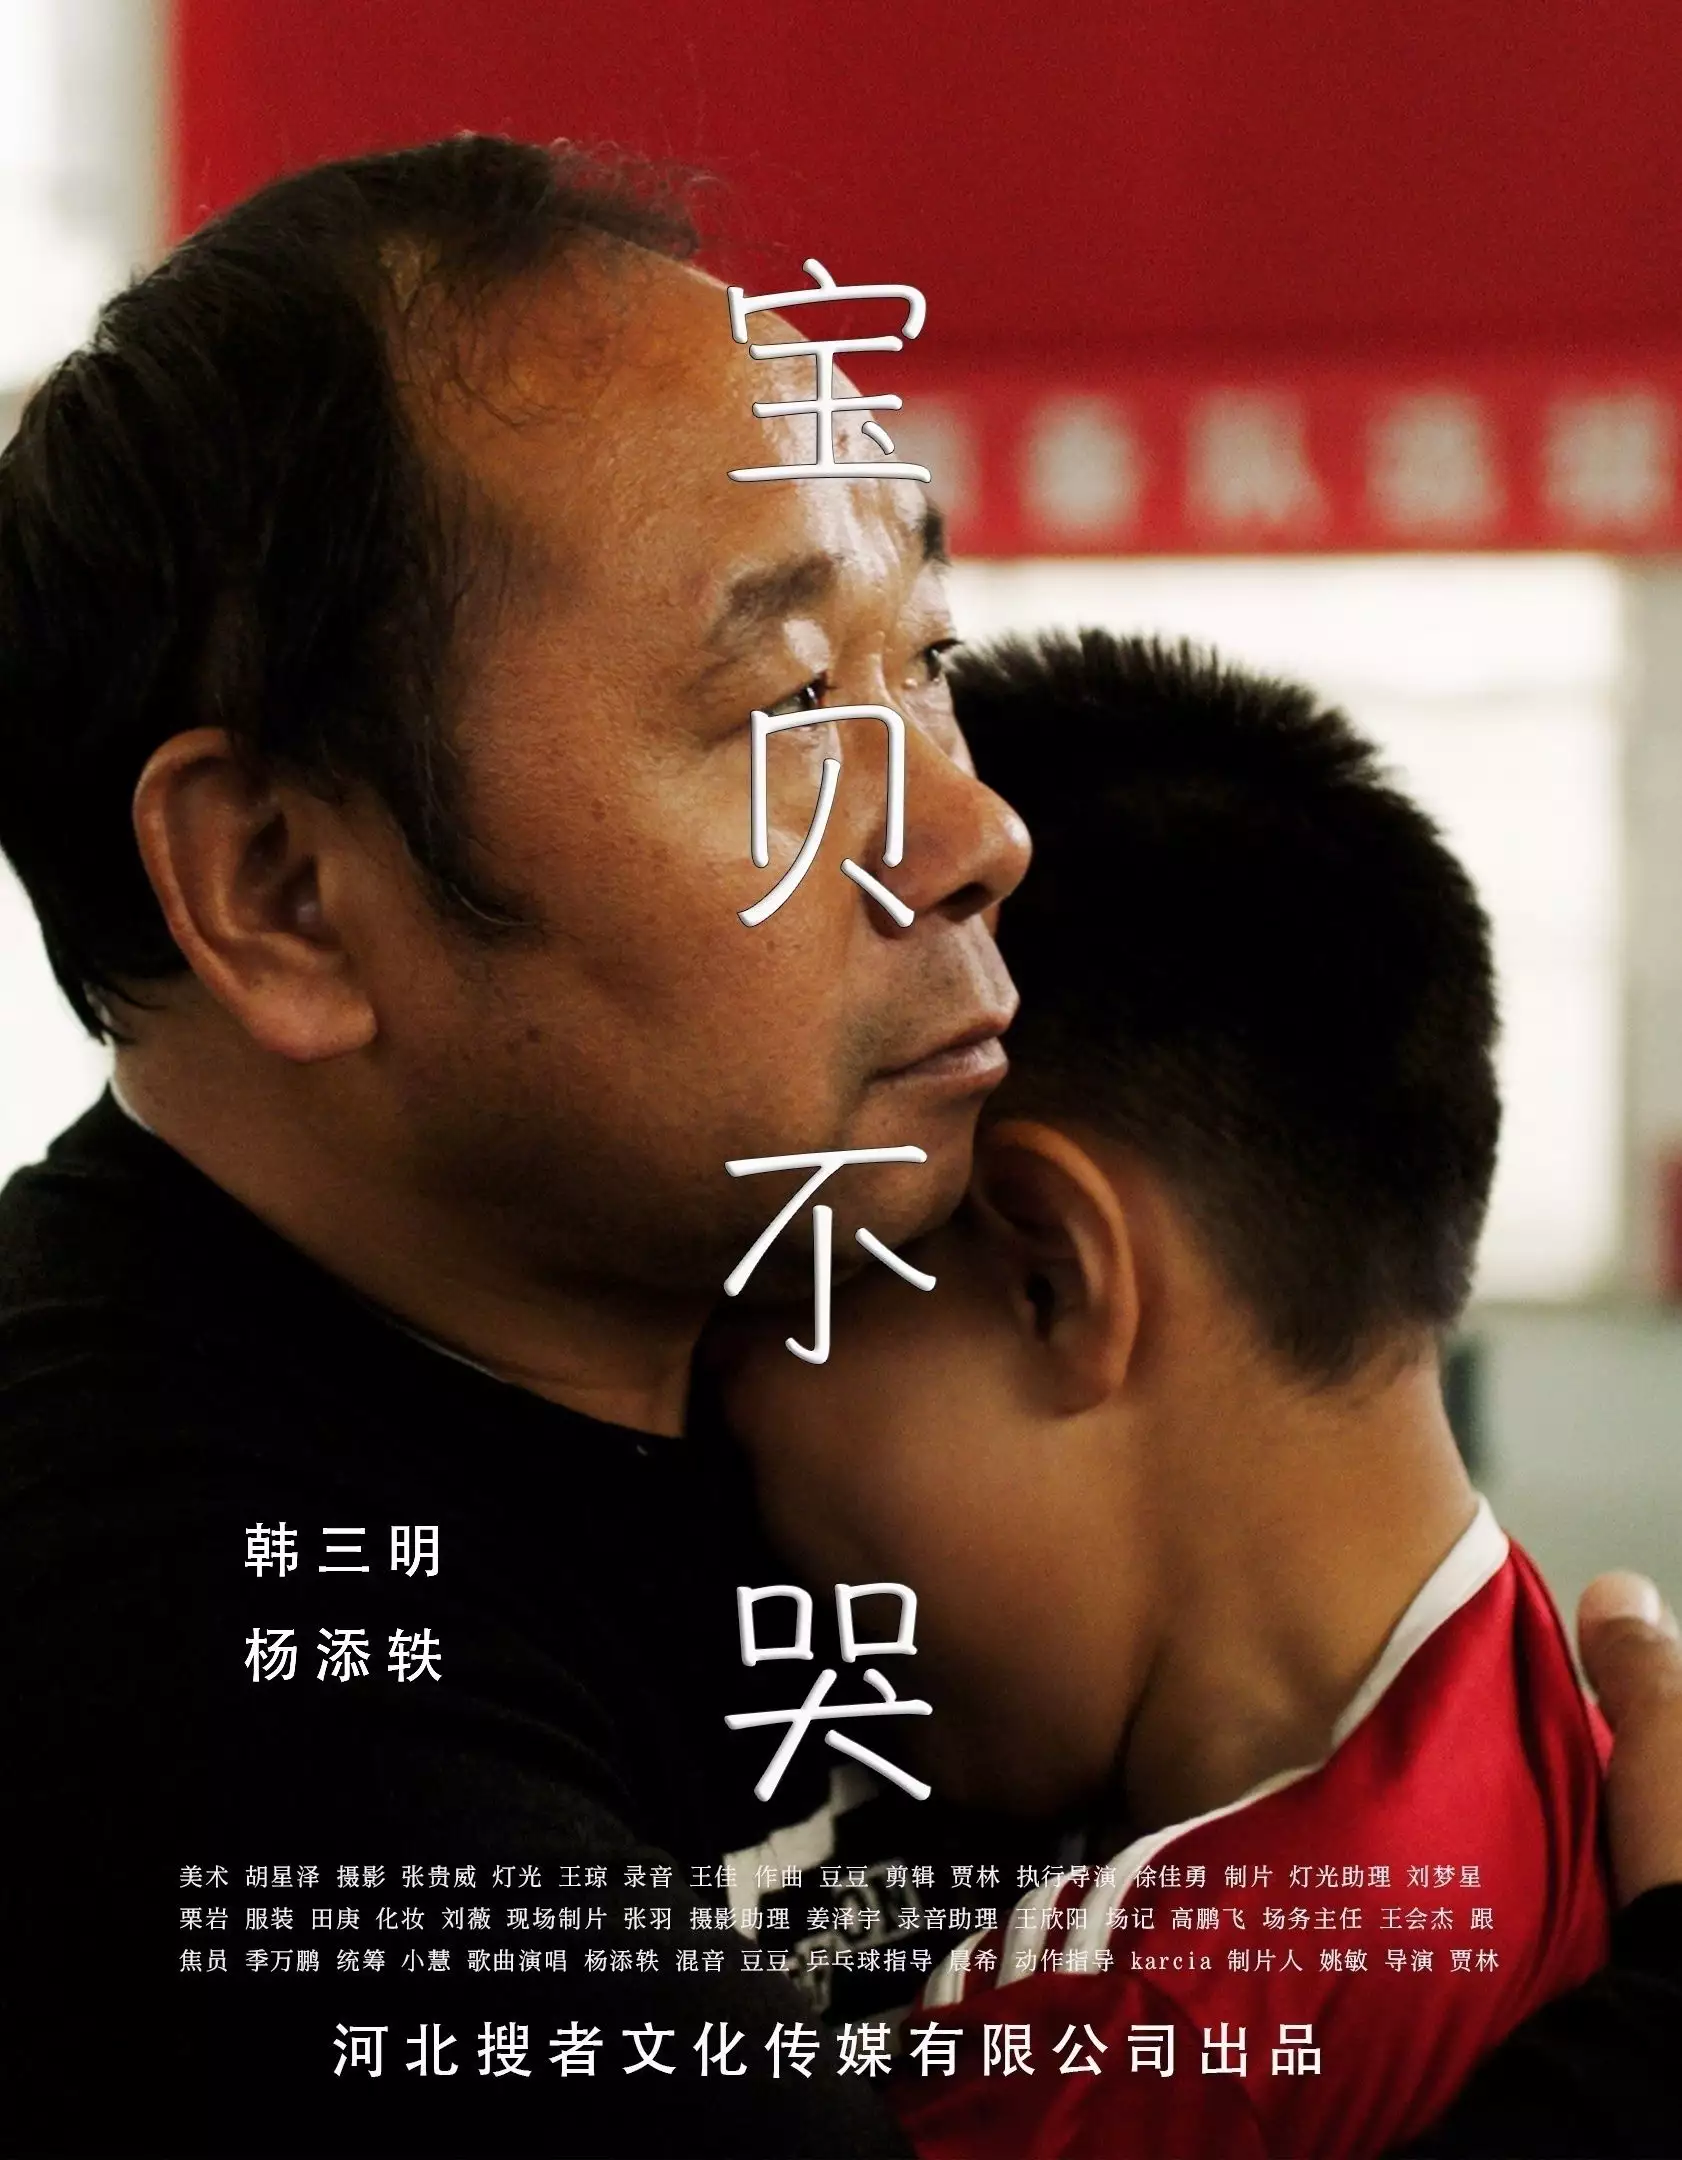 Huazhang Jinyun Shanxi Film Shining Pingyao International Film Festival broadcast article